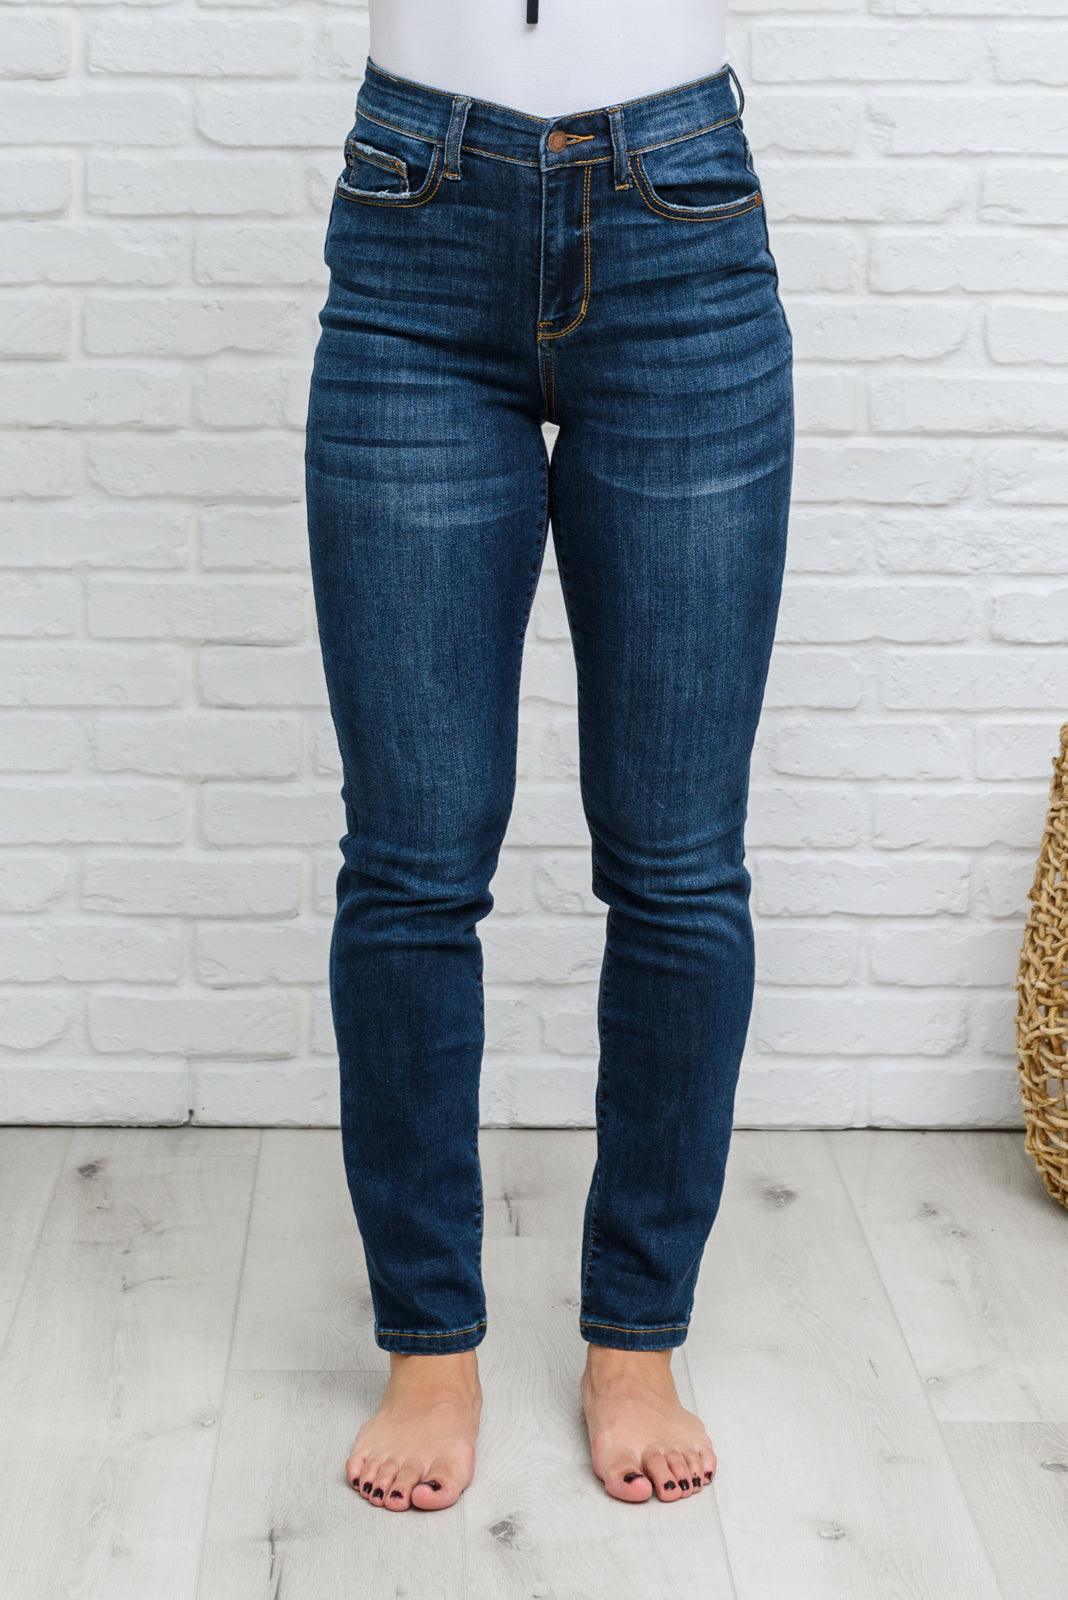 Reba Hi-Rise Clean Relaxed Fit Jeans-Womens denim-Hope Boutique &amp; Apparel